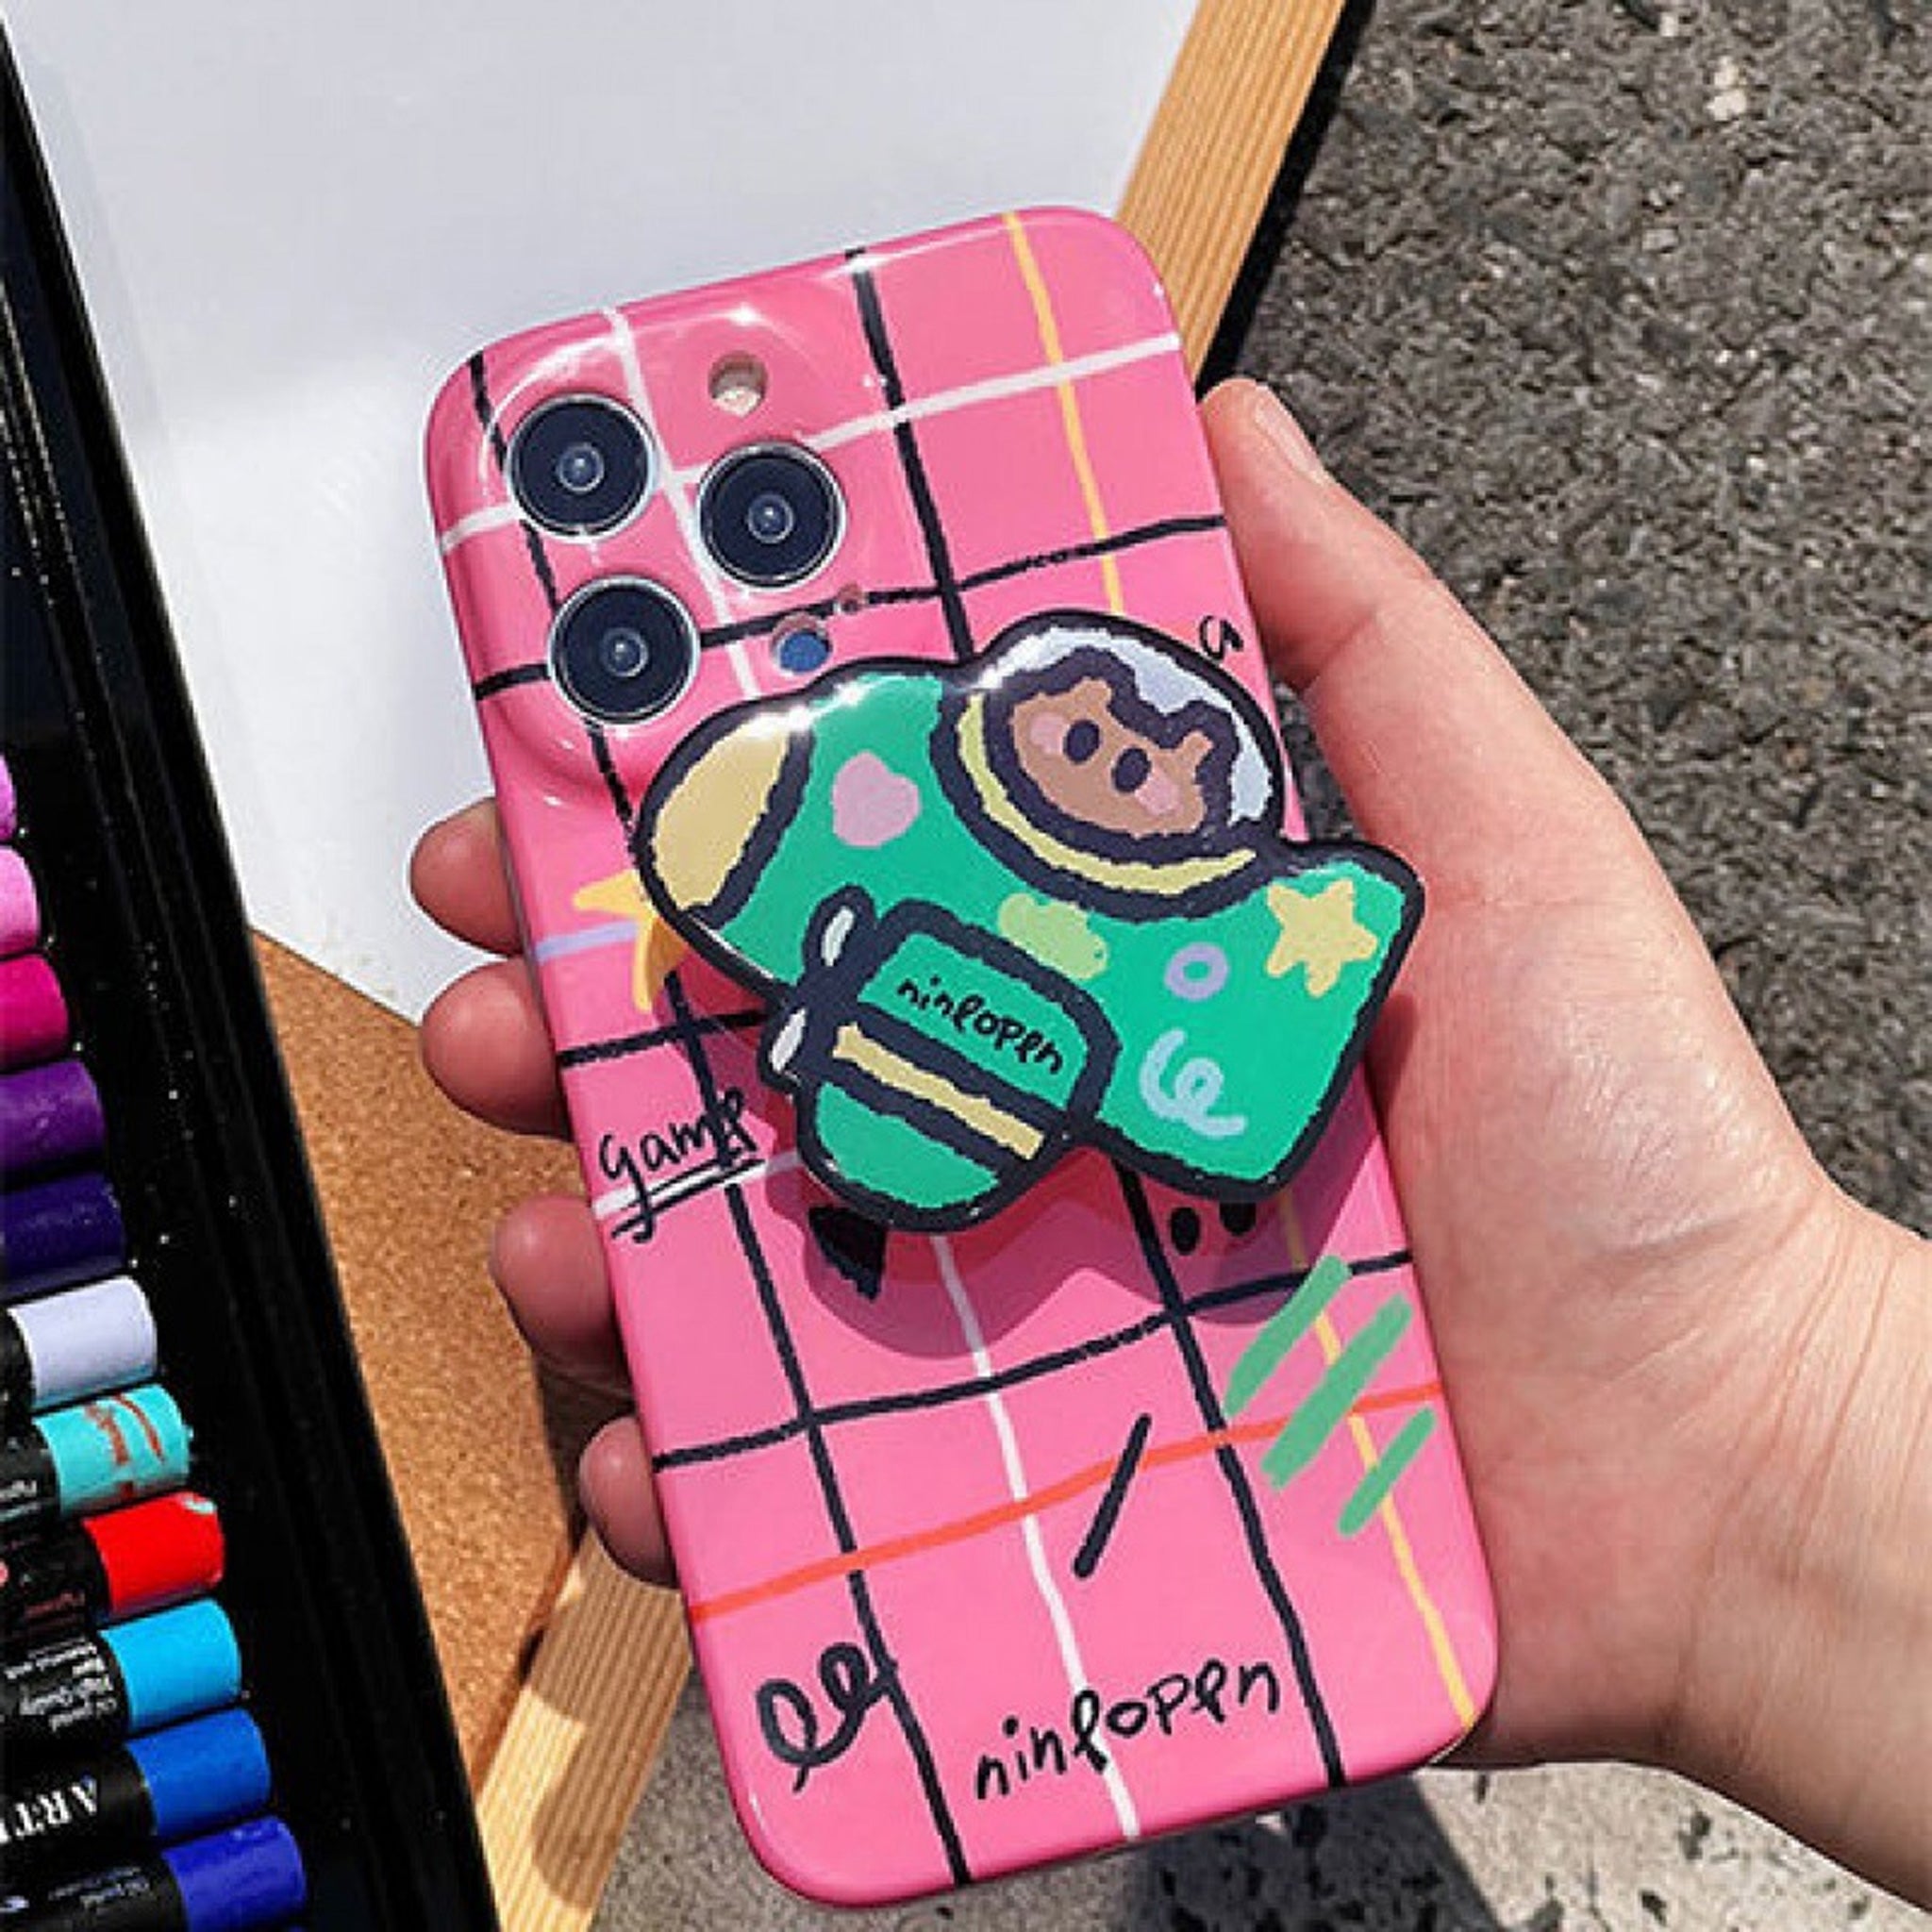 Cute Cartoon Phone Case with Pop Socket